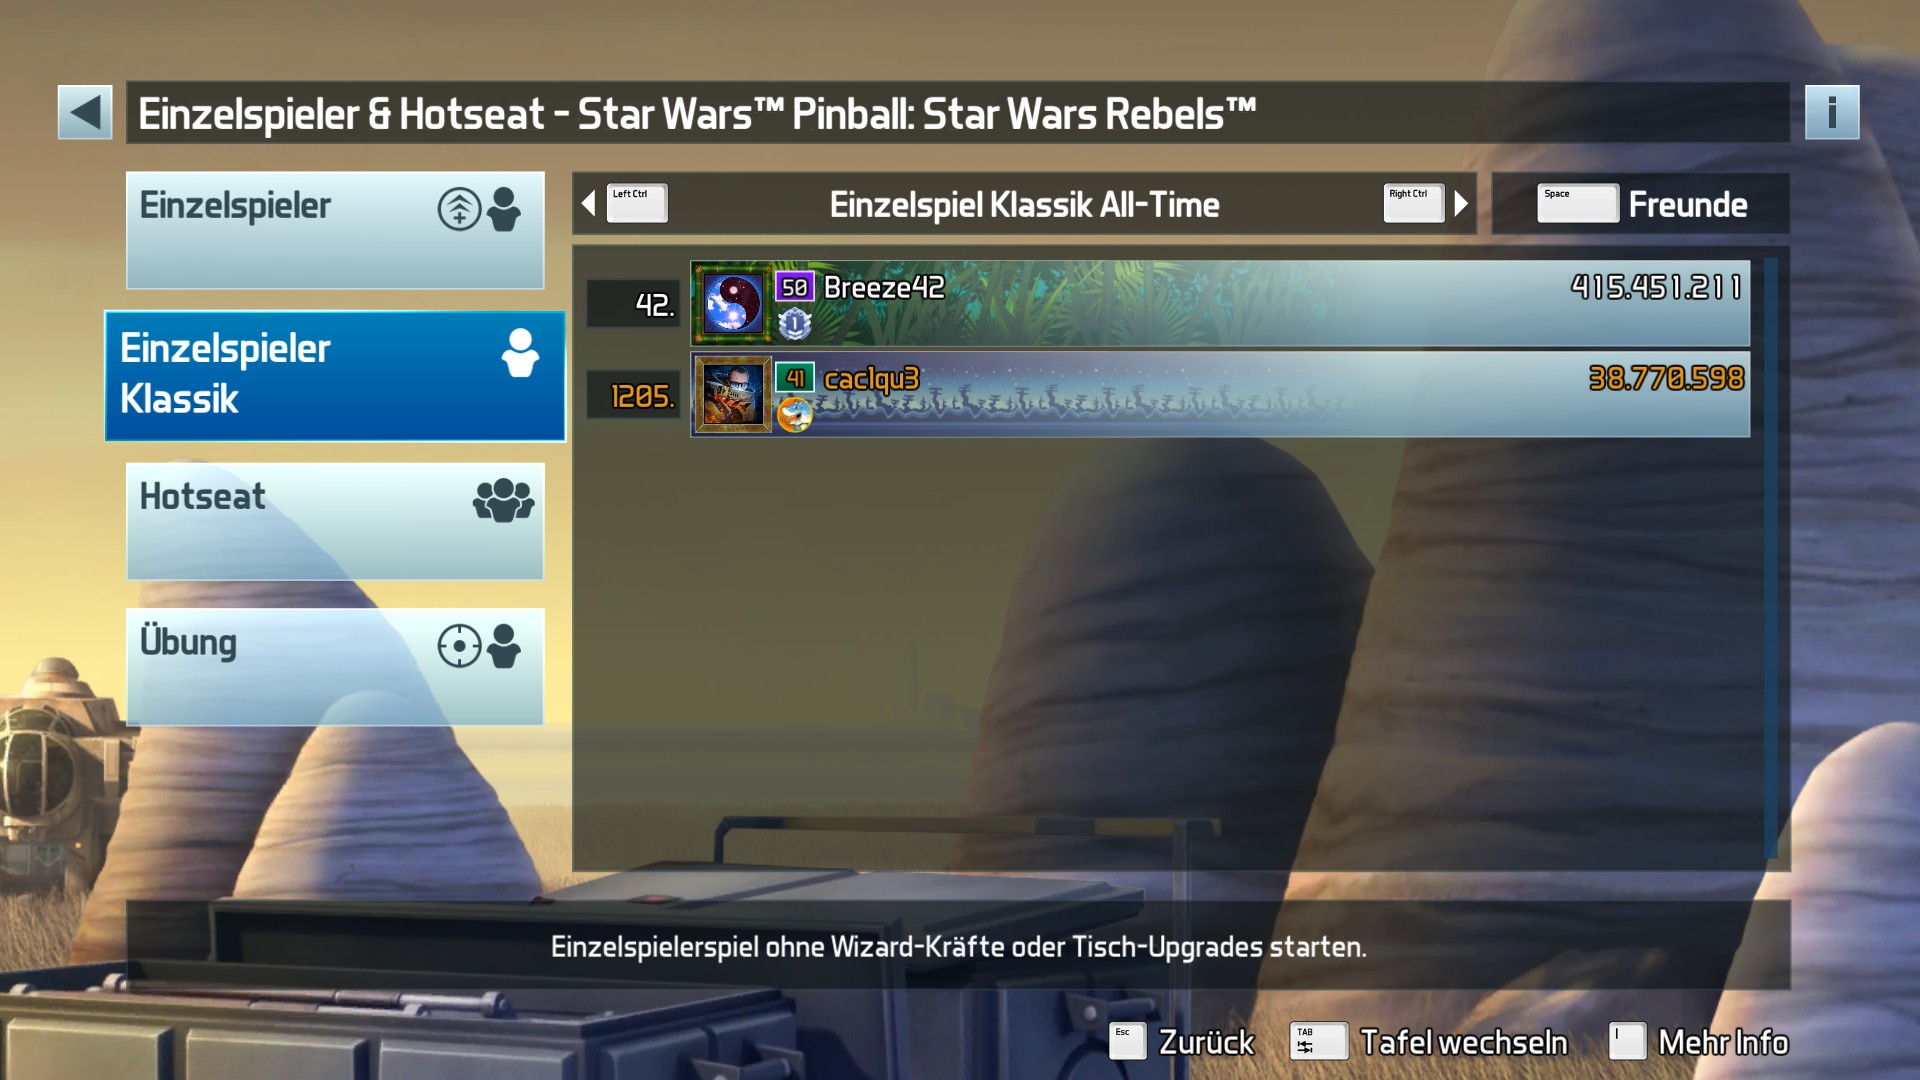 e2e4: Pinball FX3: Star Wars Pinball: Star Wars Rebels [Classic] (PC) 38,770,598 points on 2022-05-19 12:15:12